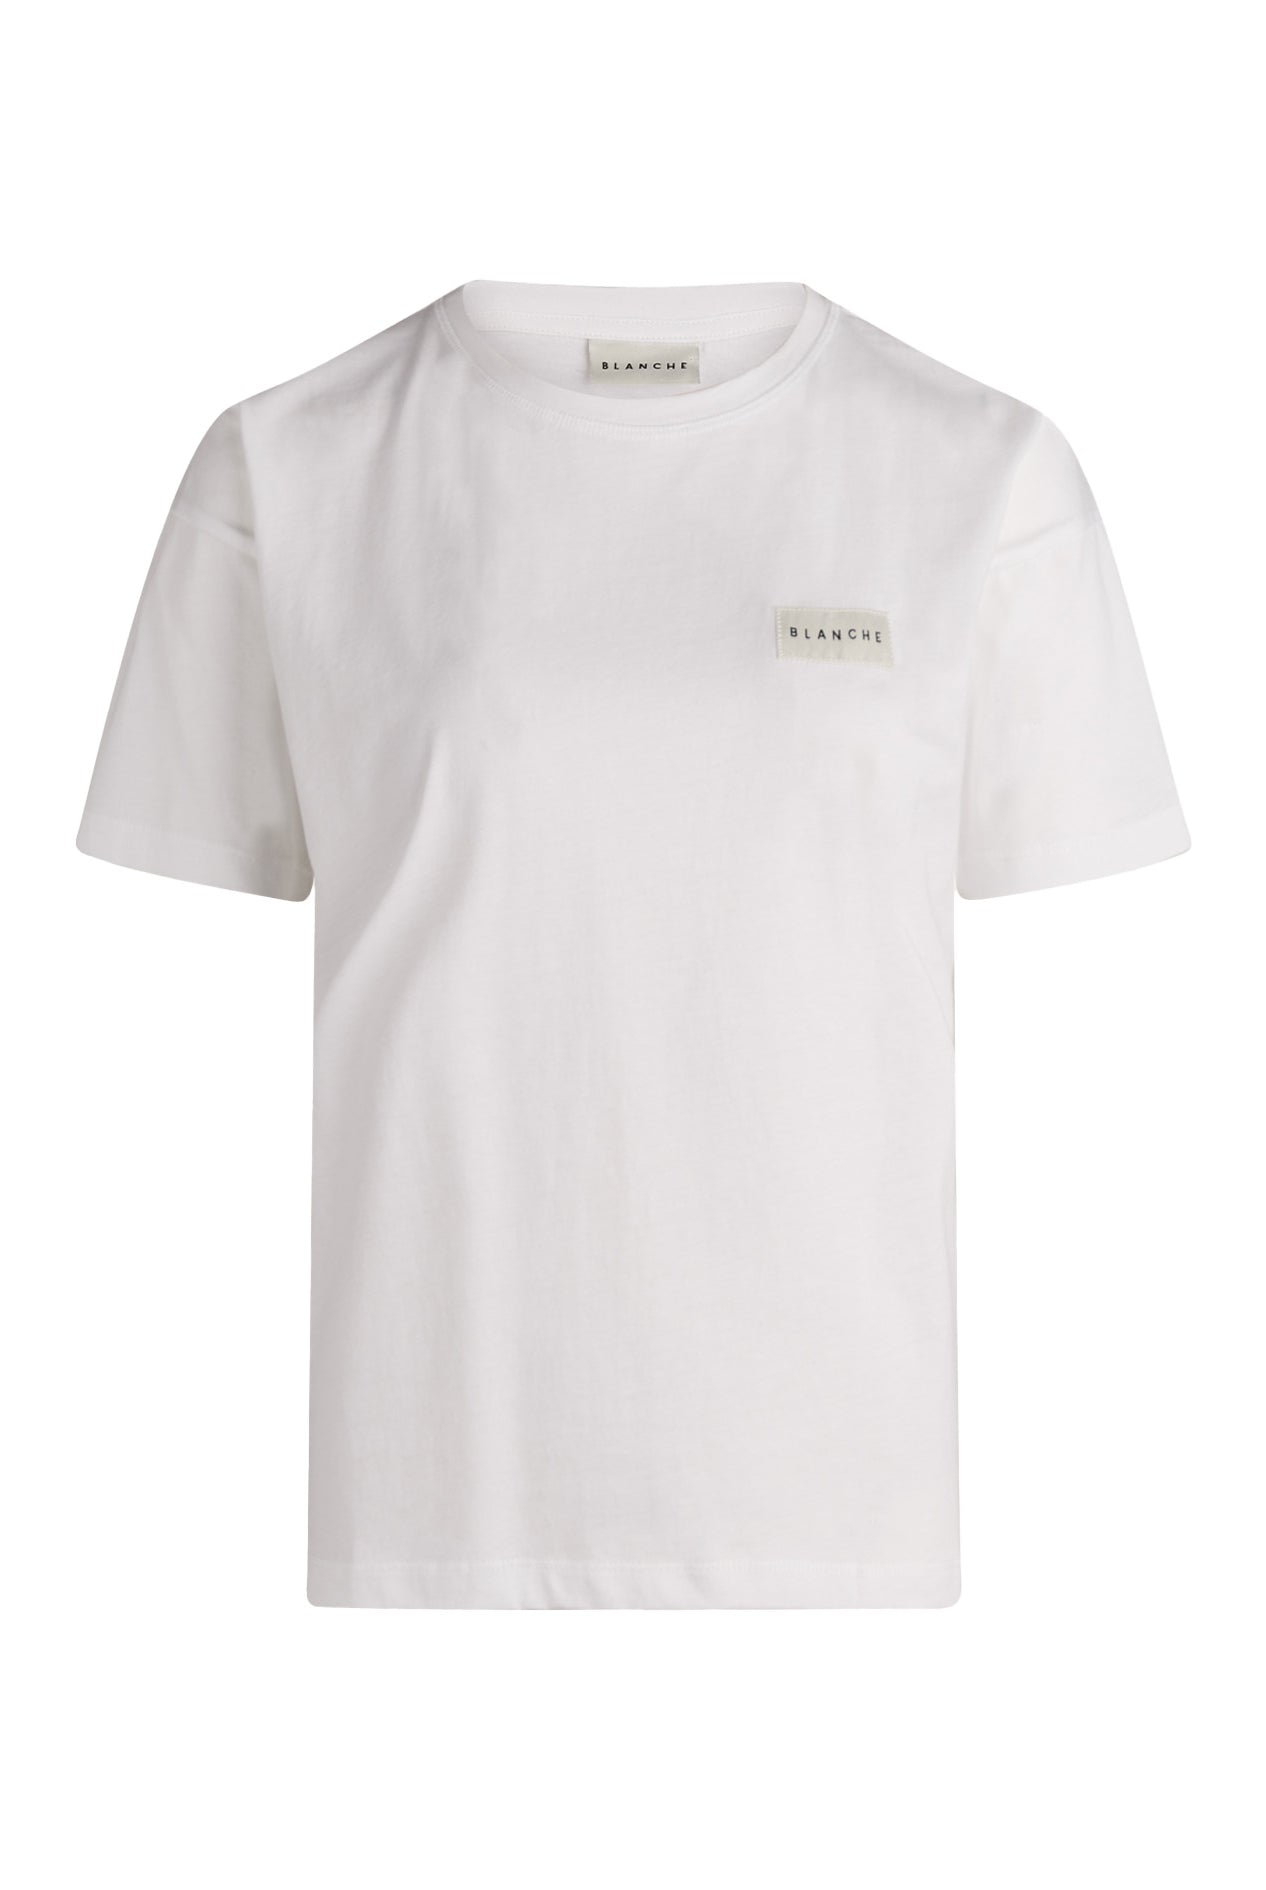 BLANCHE Copenhagen Main-BL Badge SS T-shirts and Tops 10 White